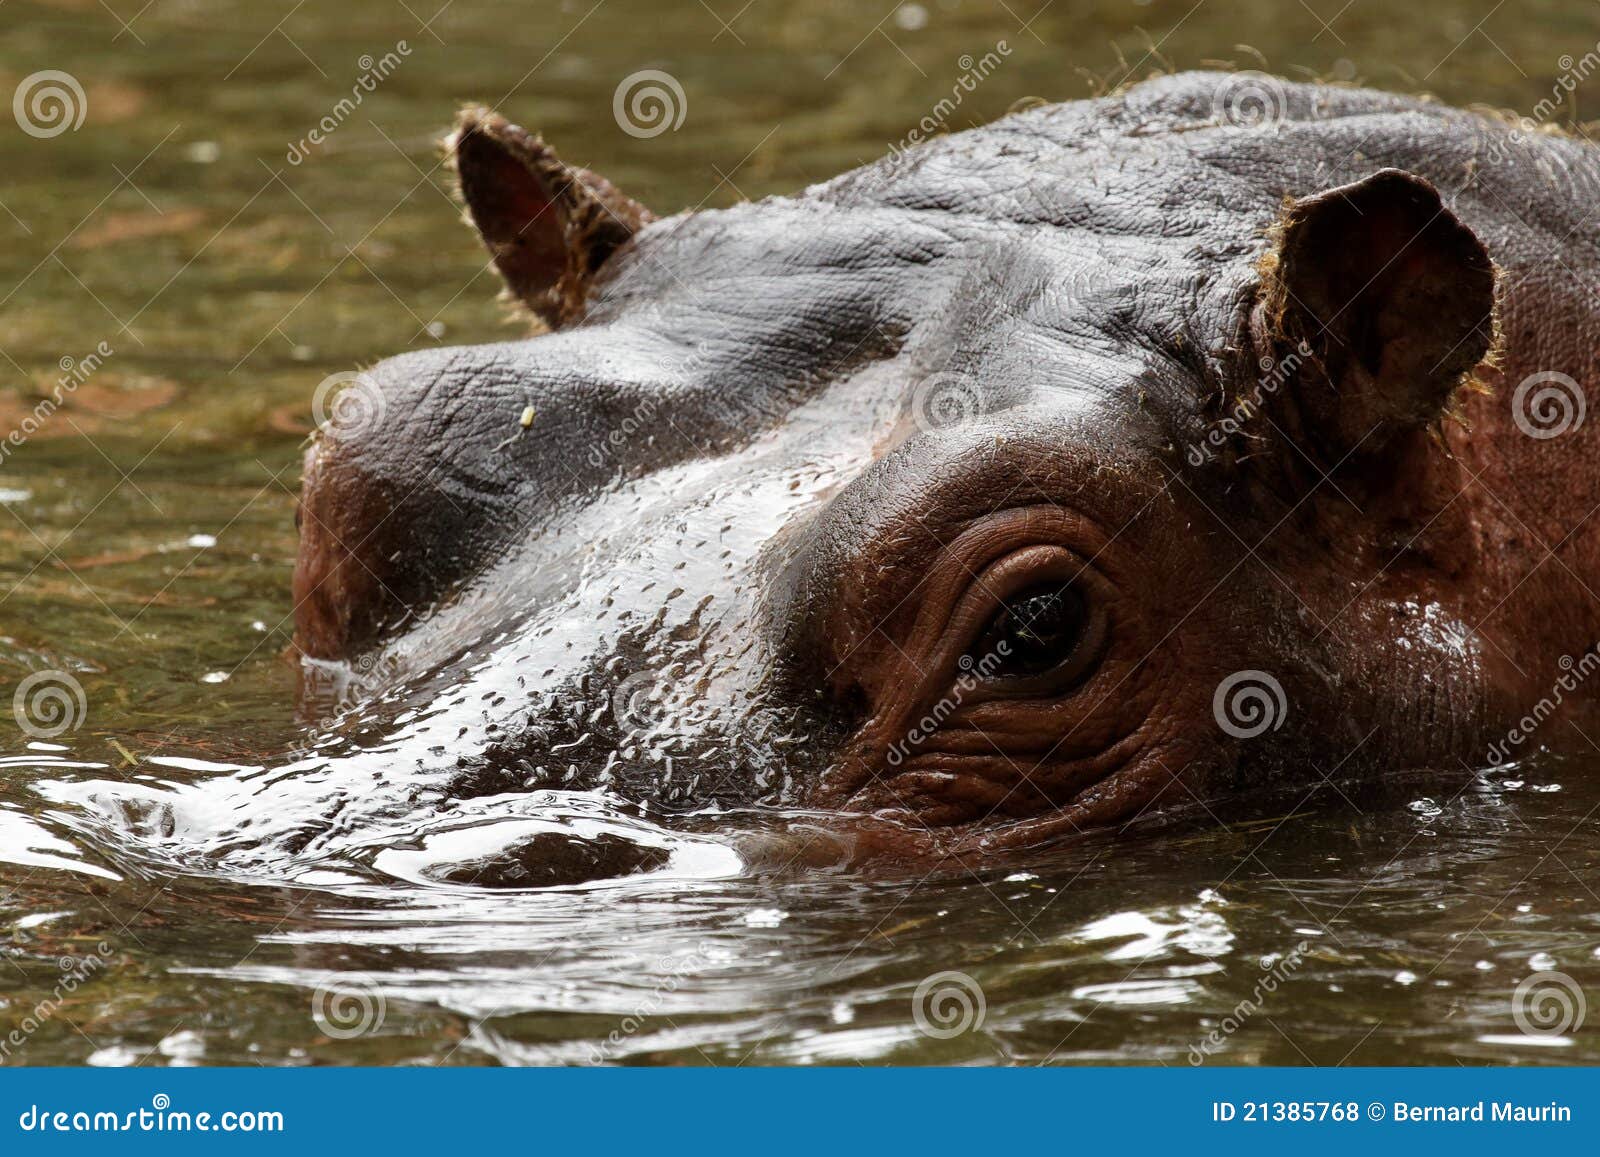 glance of hippopotamus